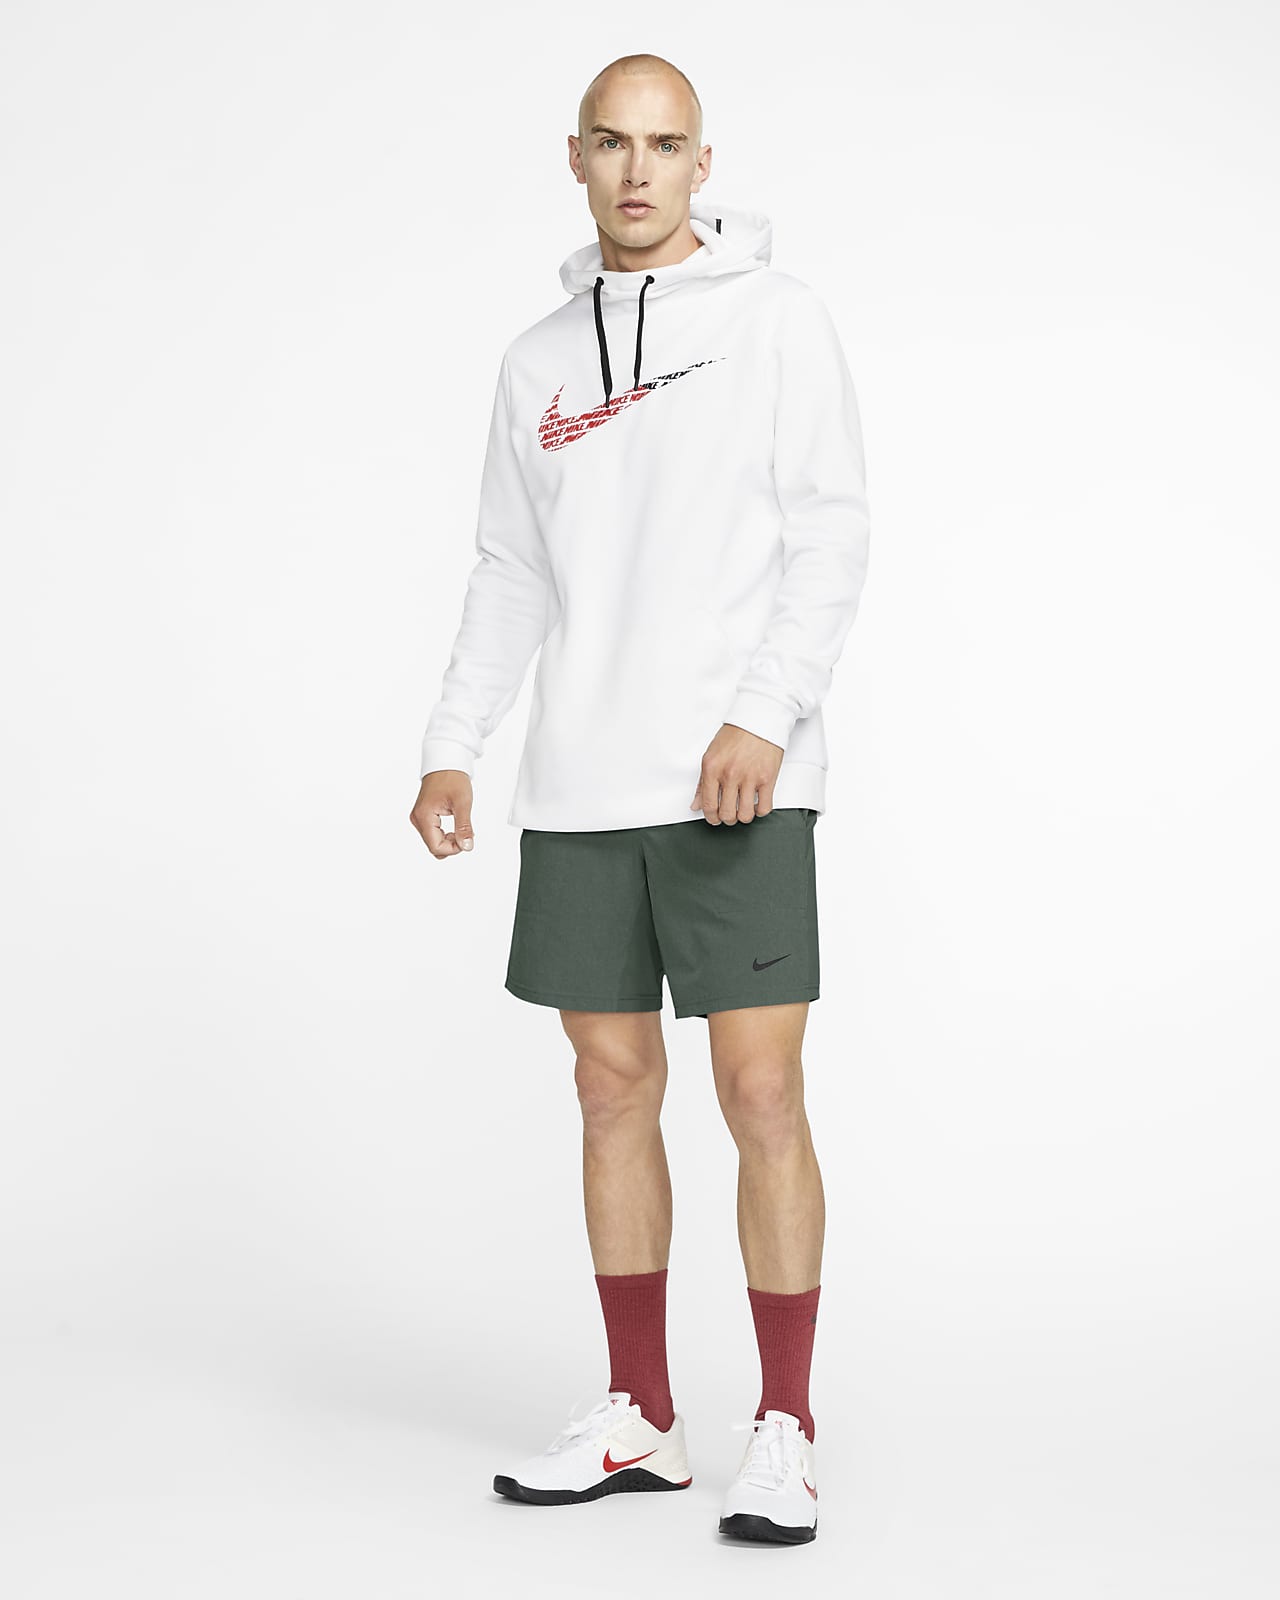 Nike Flex mens Training Shorts (Quick Look) 